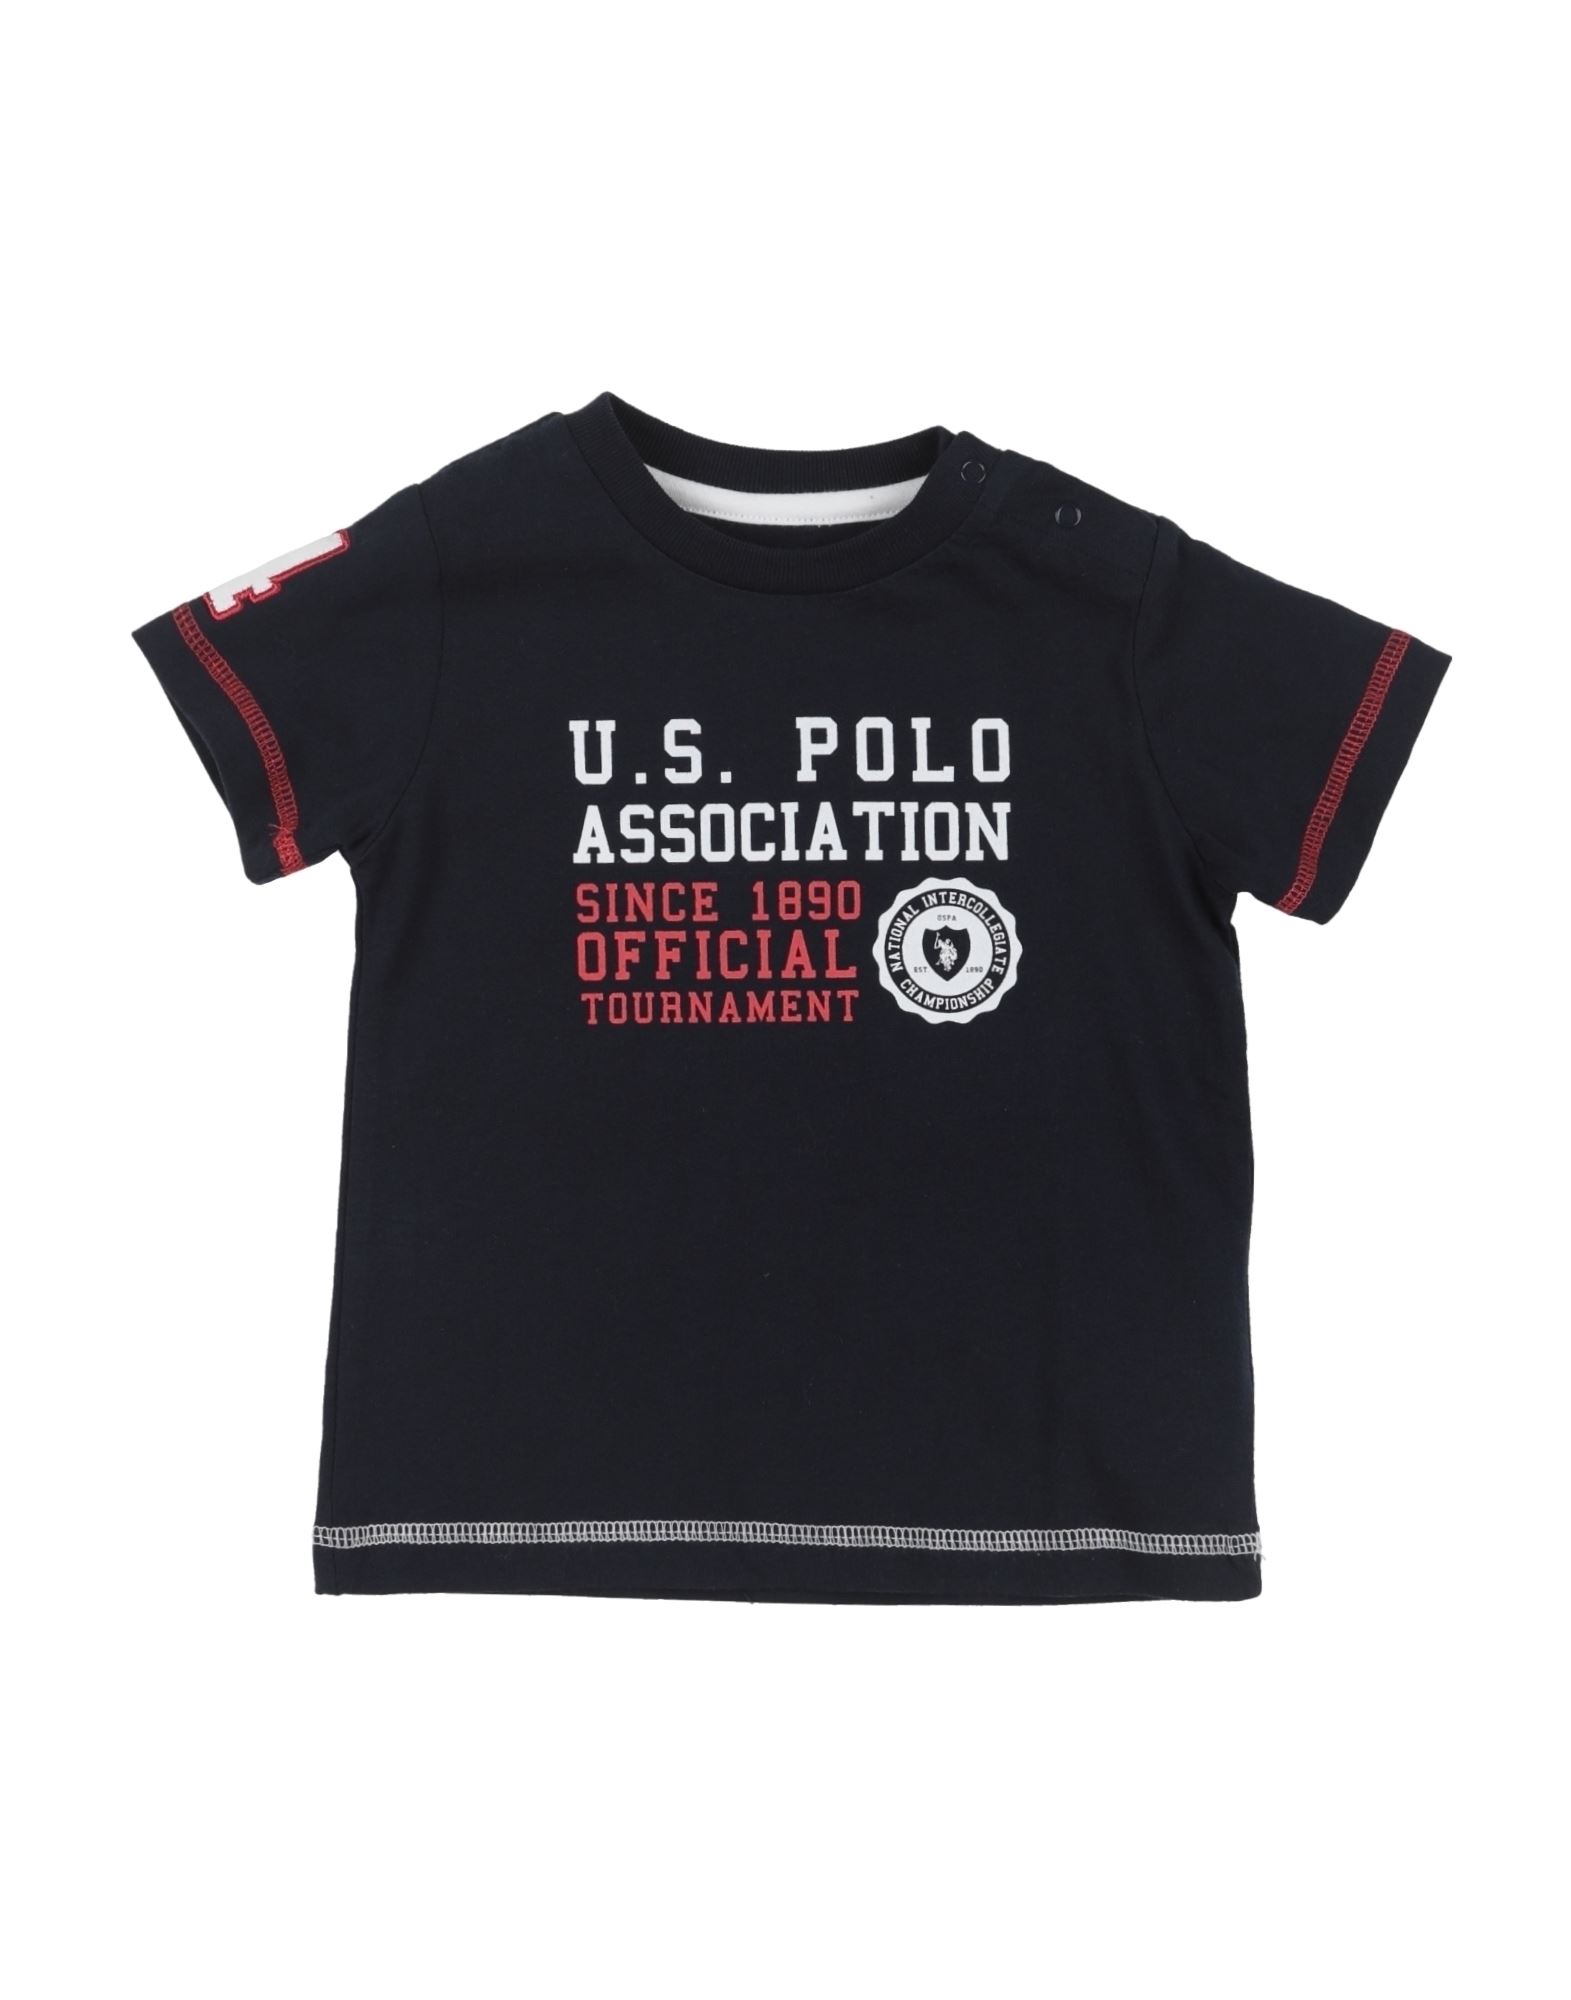 U.S.POLO ASSN. T-shirts Kinder Nachtblau von U.S.POLO ASSN.